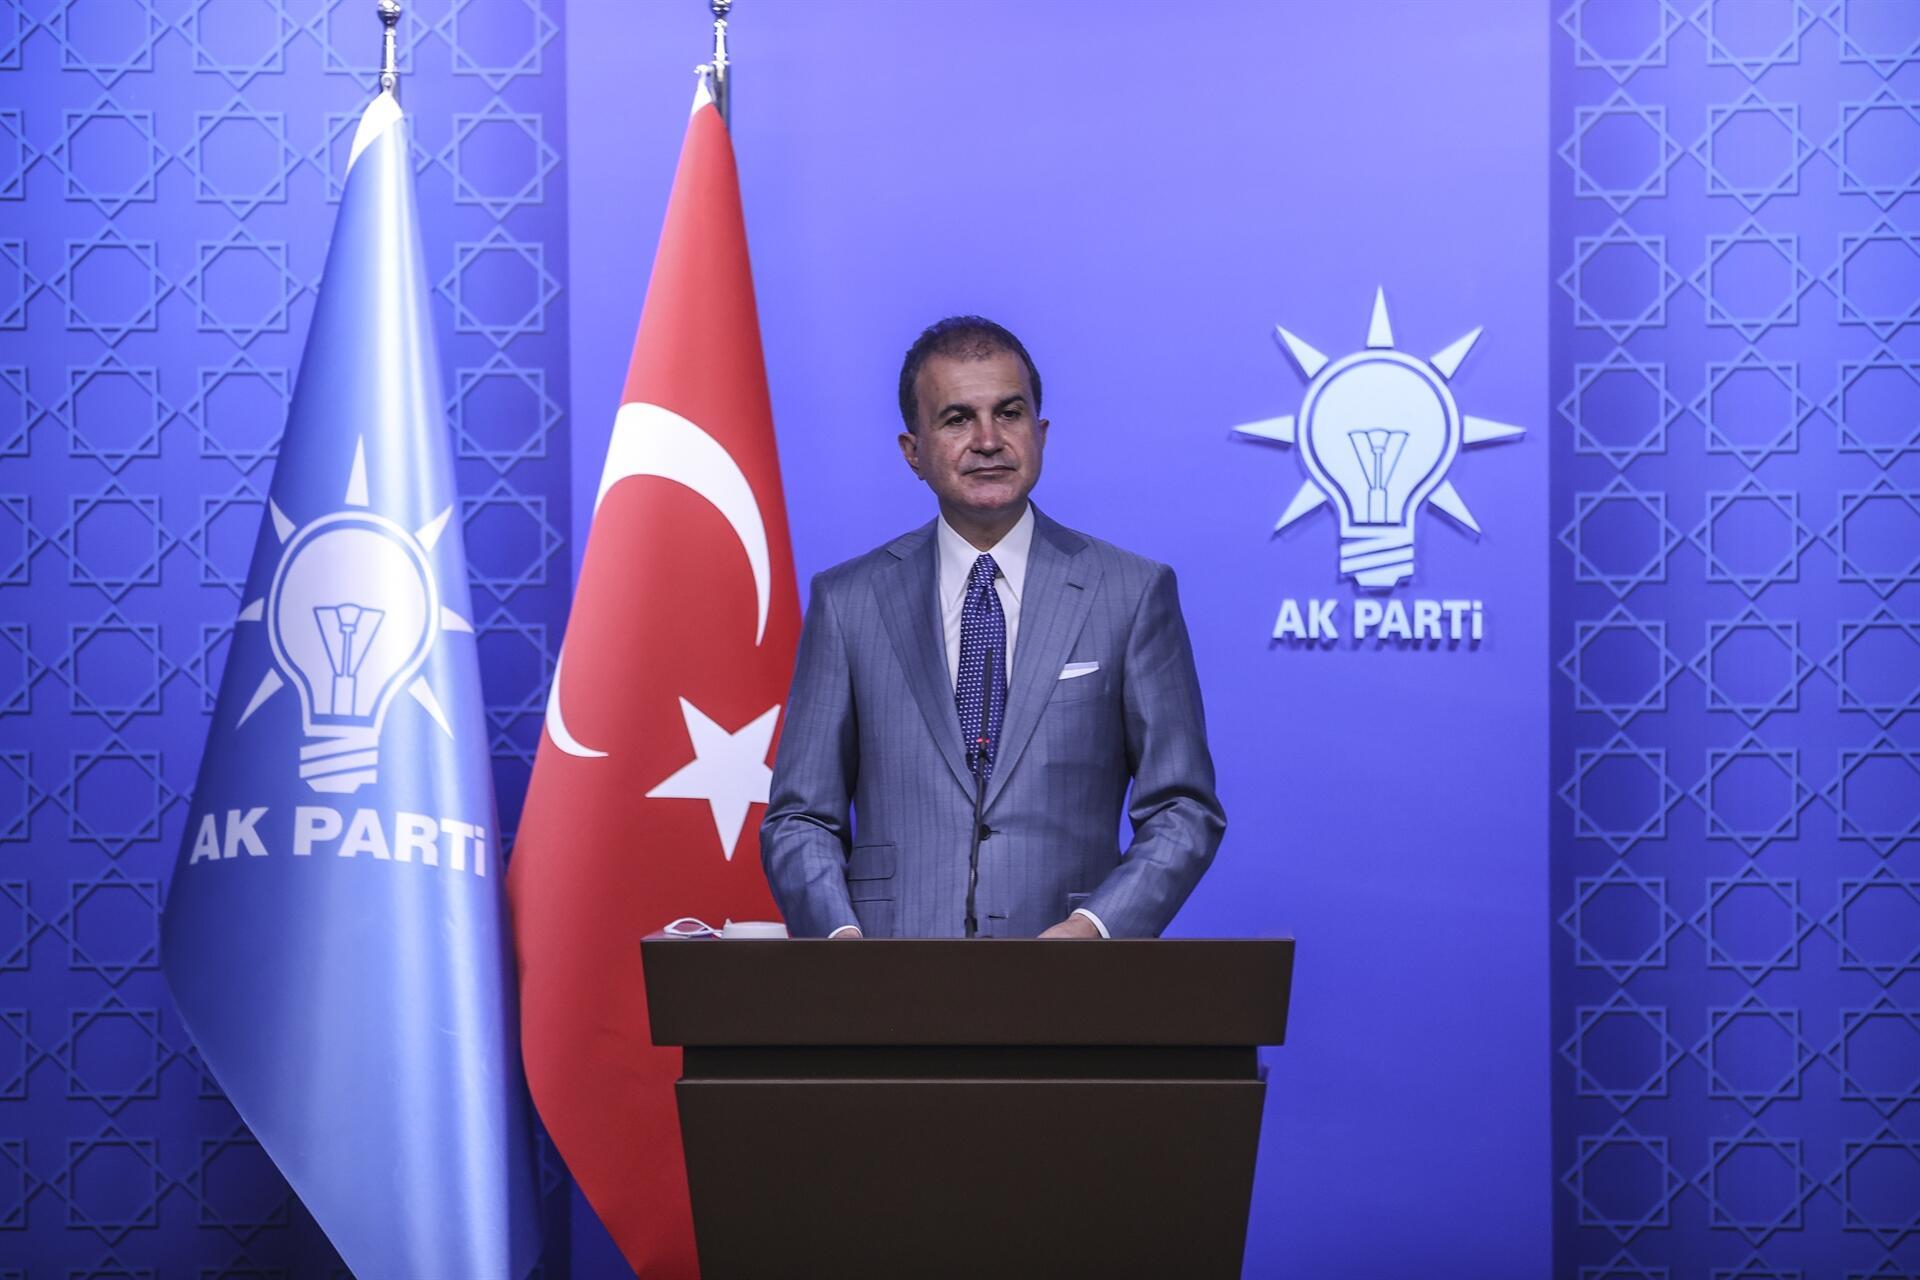 Parliament to adopt animal protection law: AKP spokesperson - Türkiye News